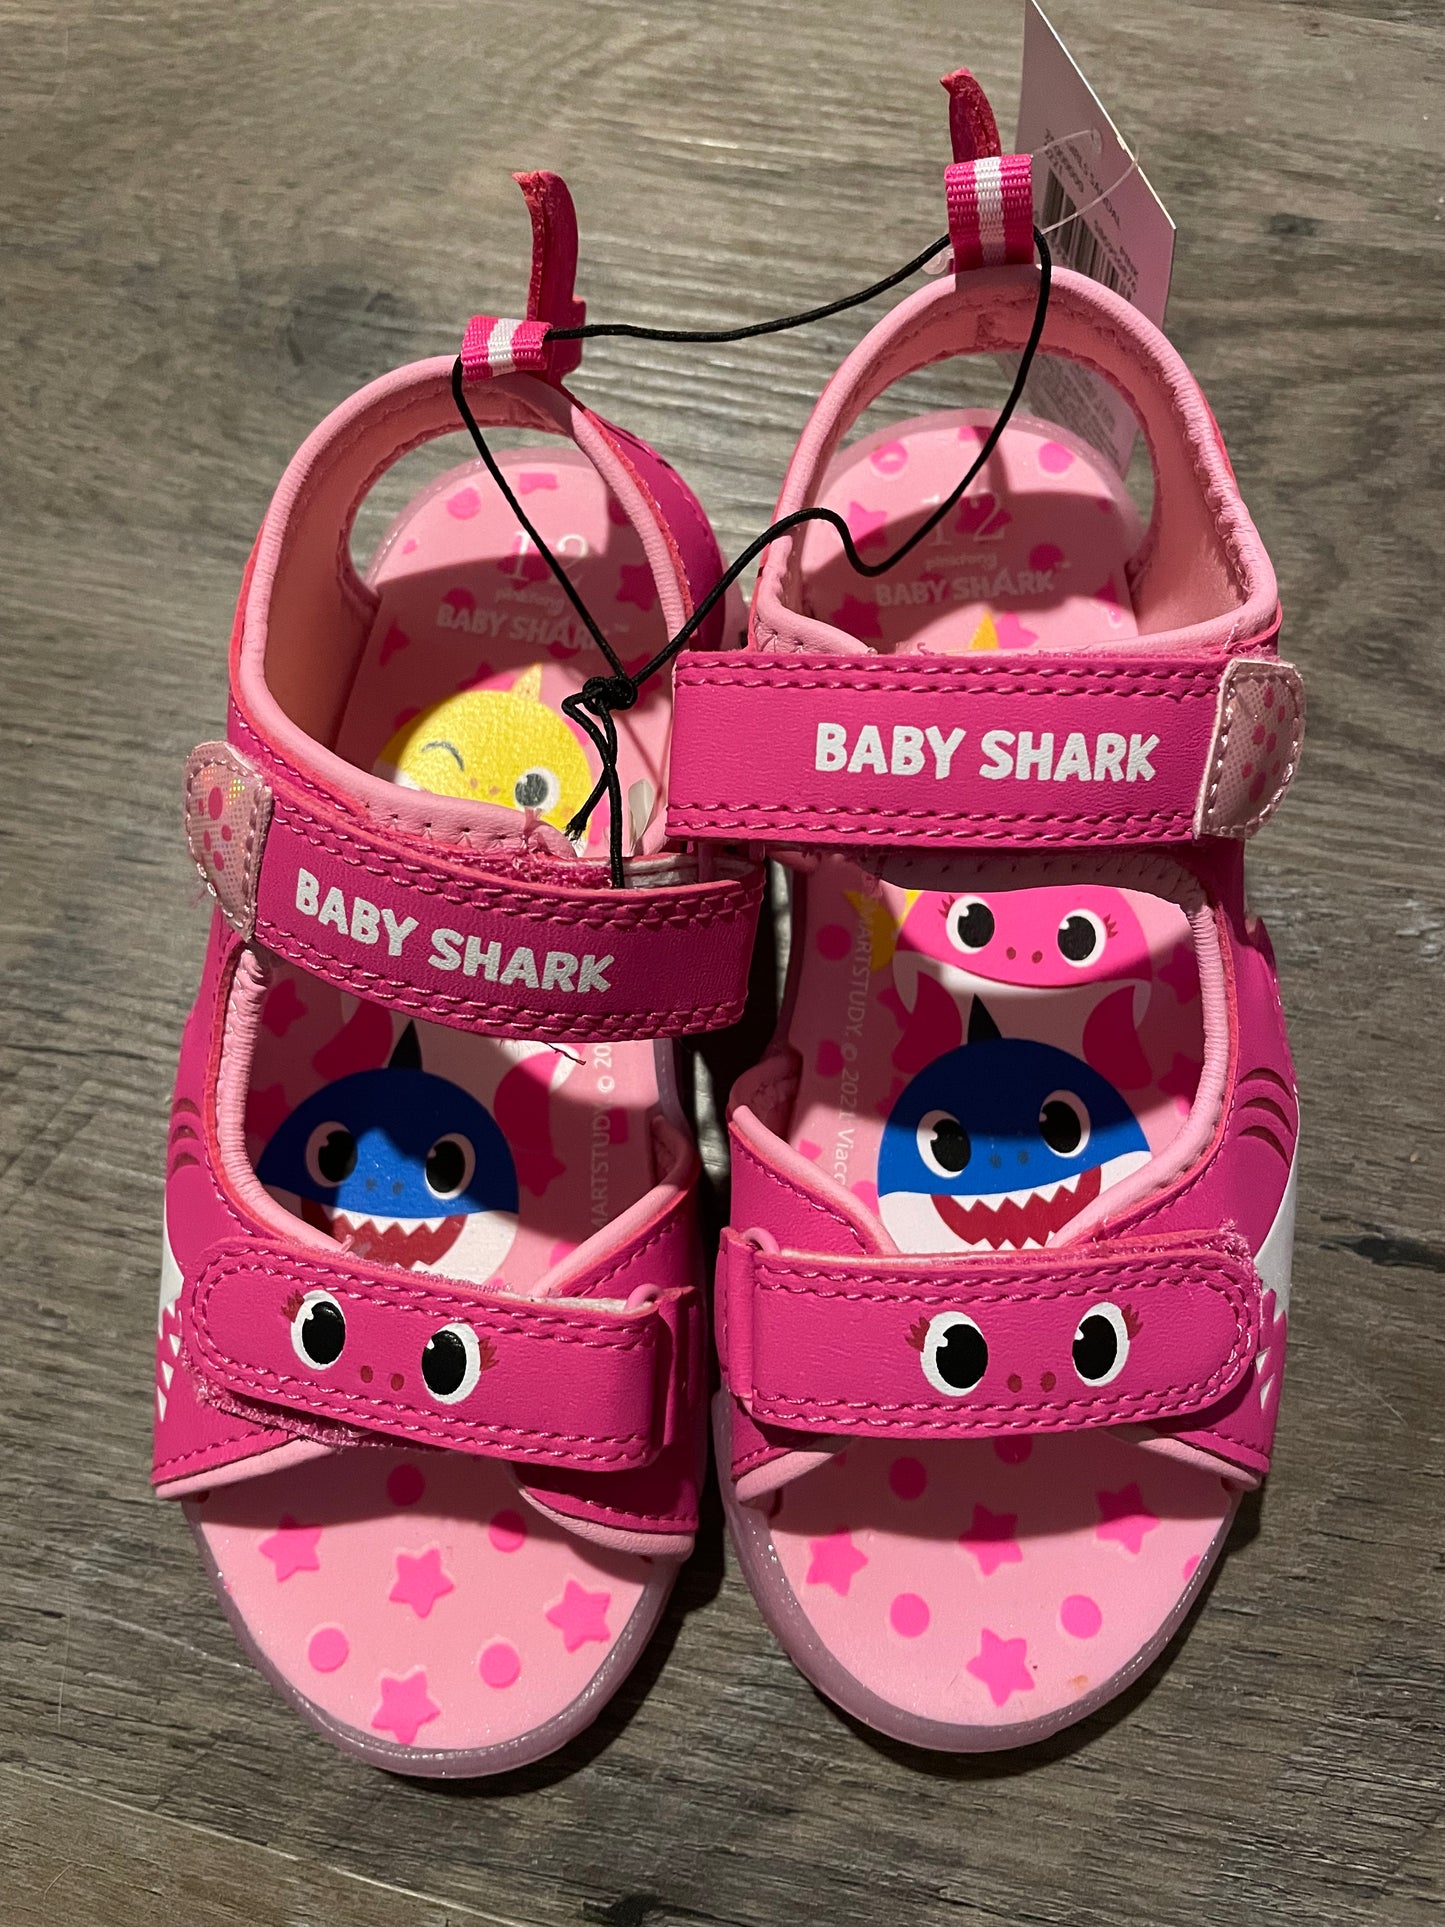 New little girl size 12 baby shark light up sandals.